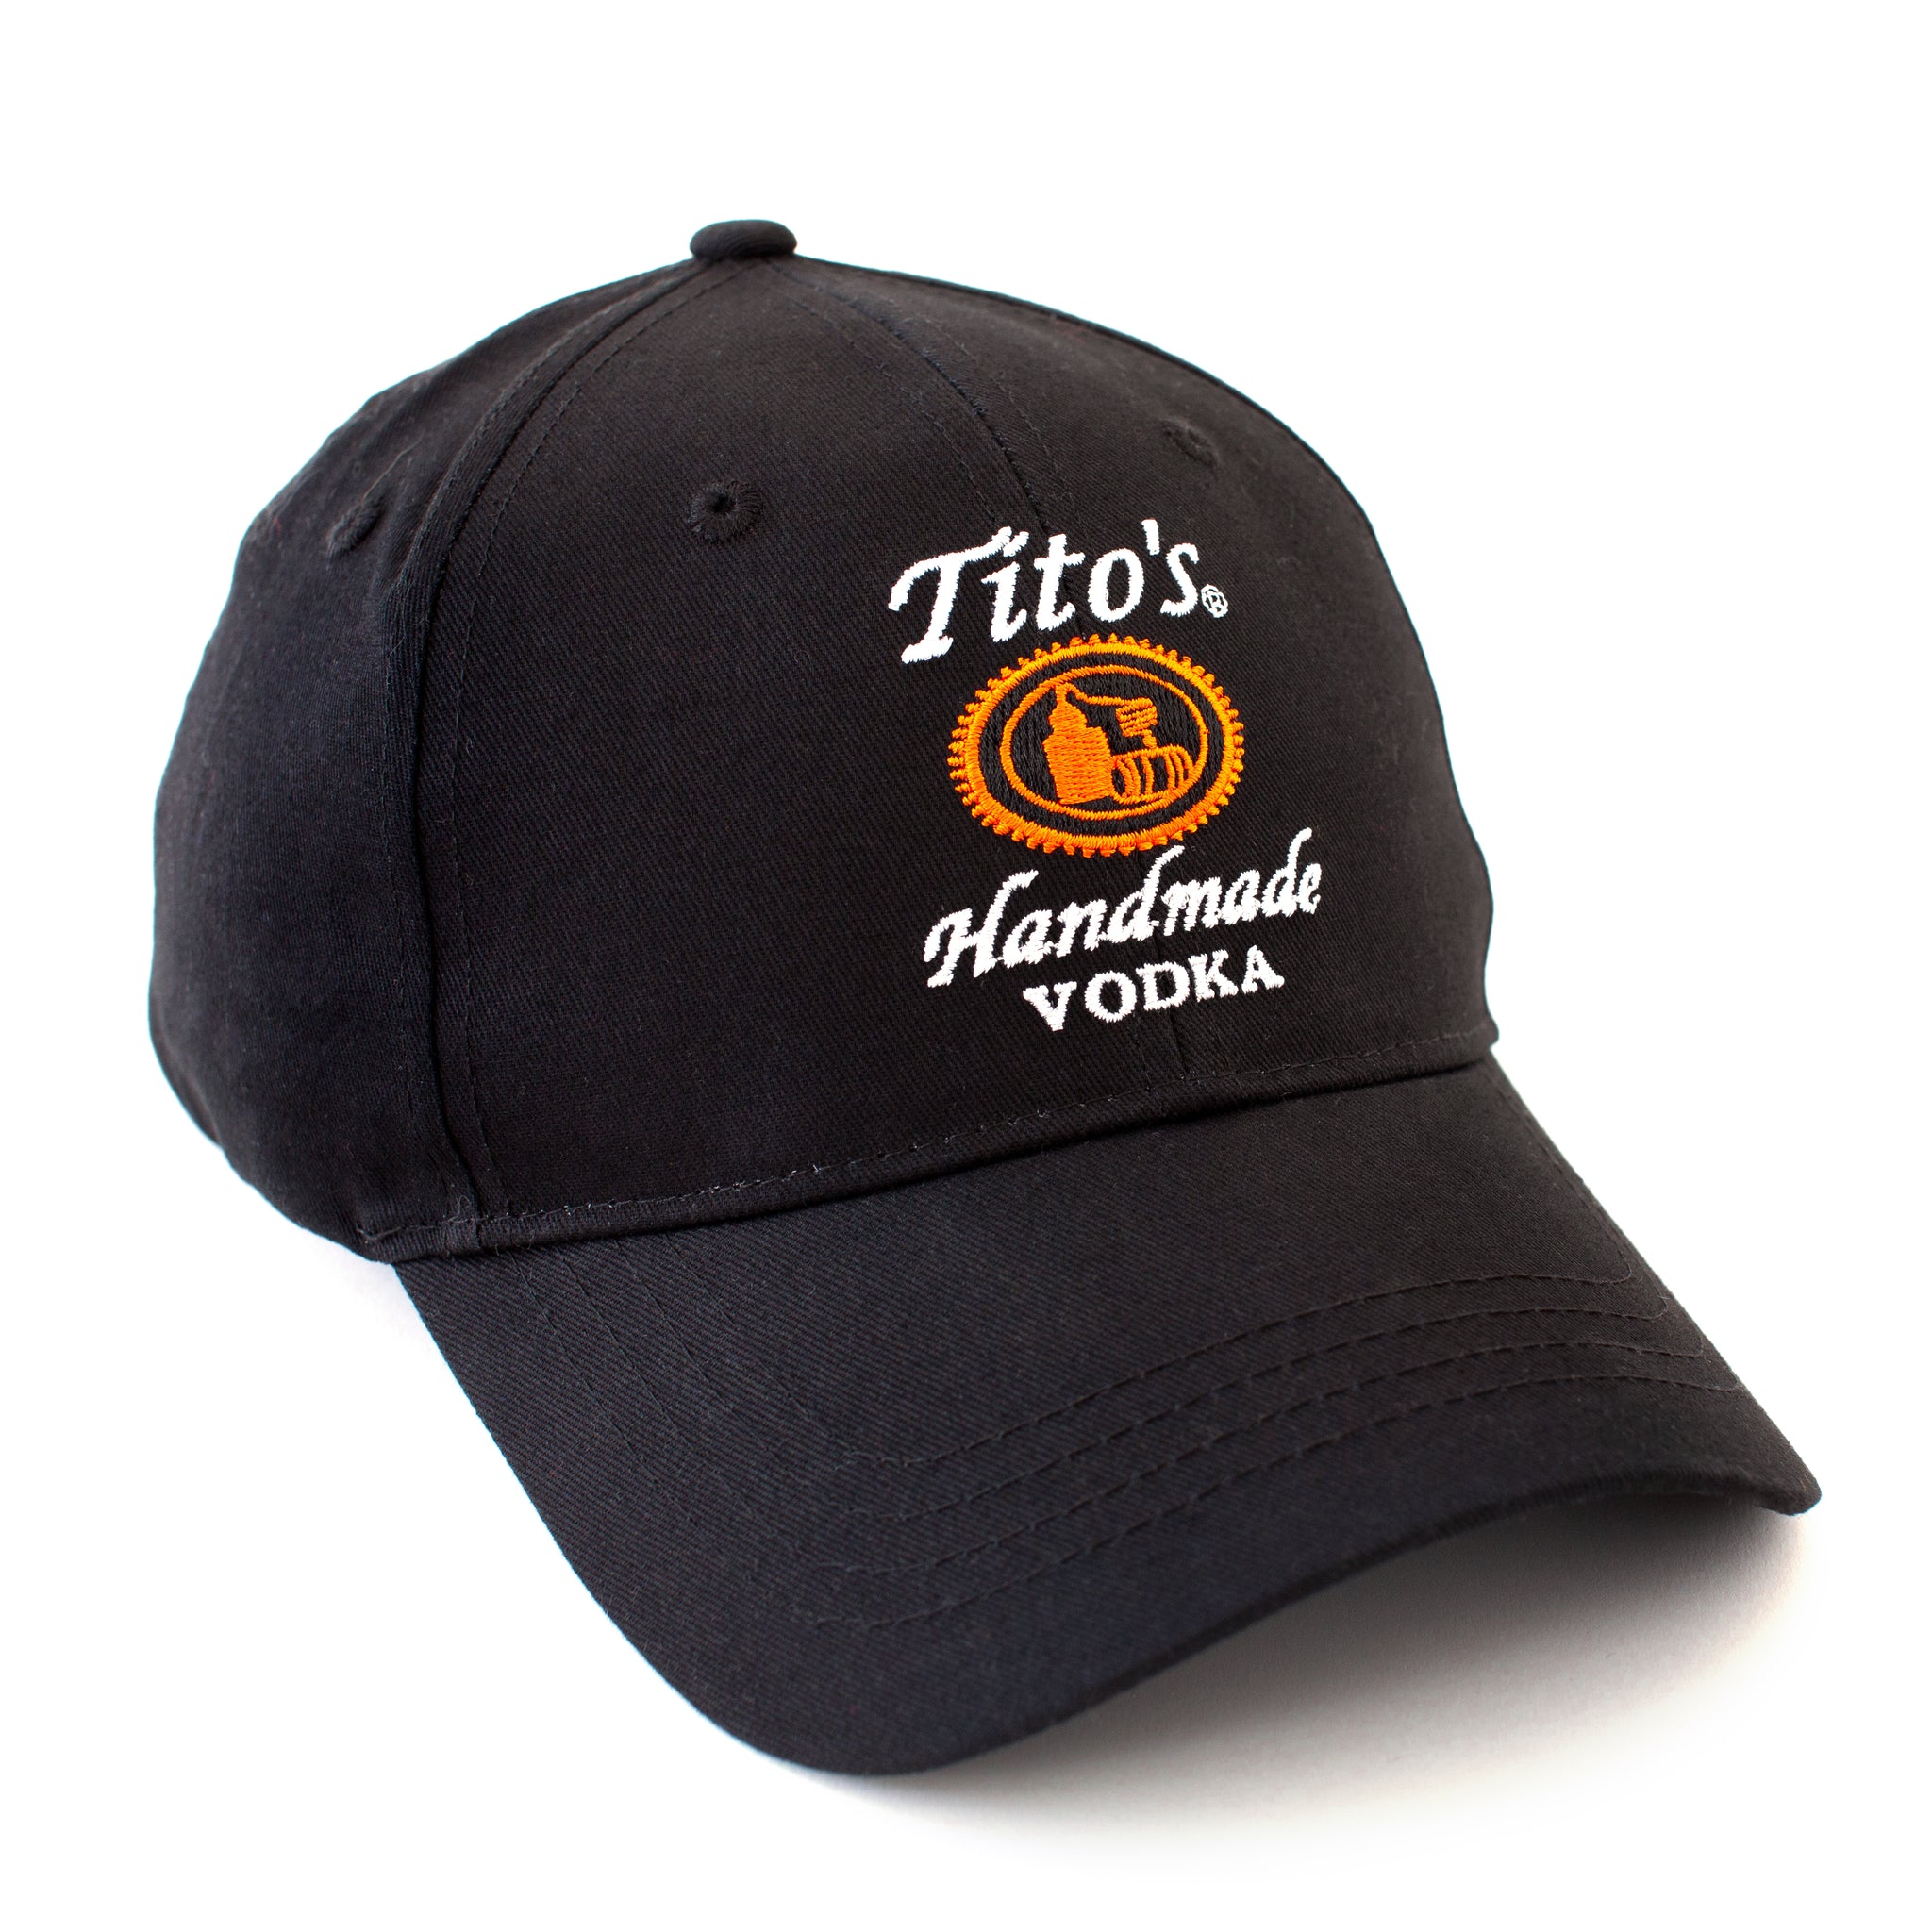 Black Tito's Handmade Vodka logo baseball hat